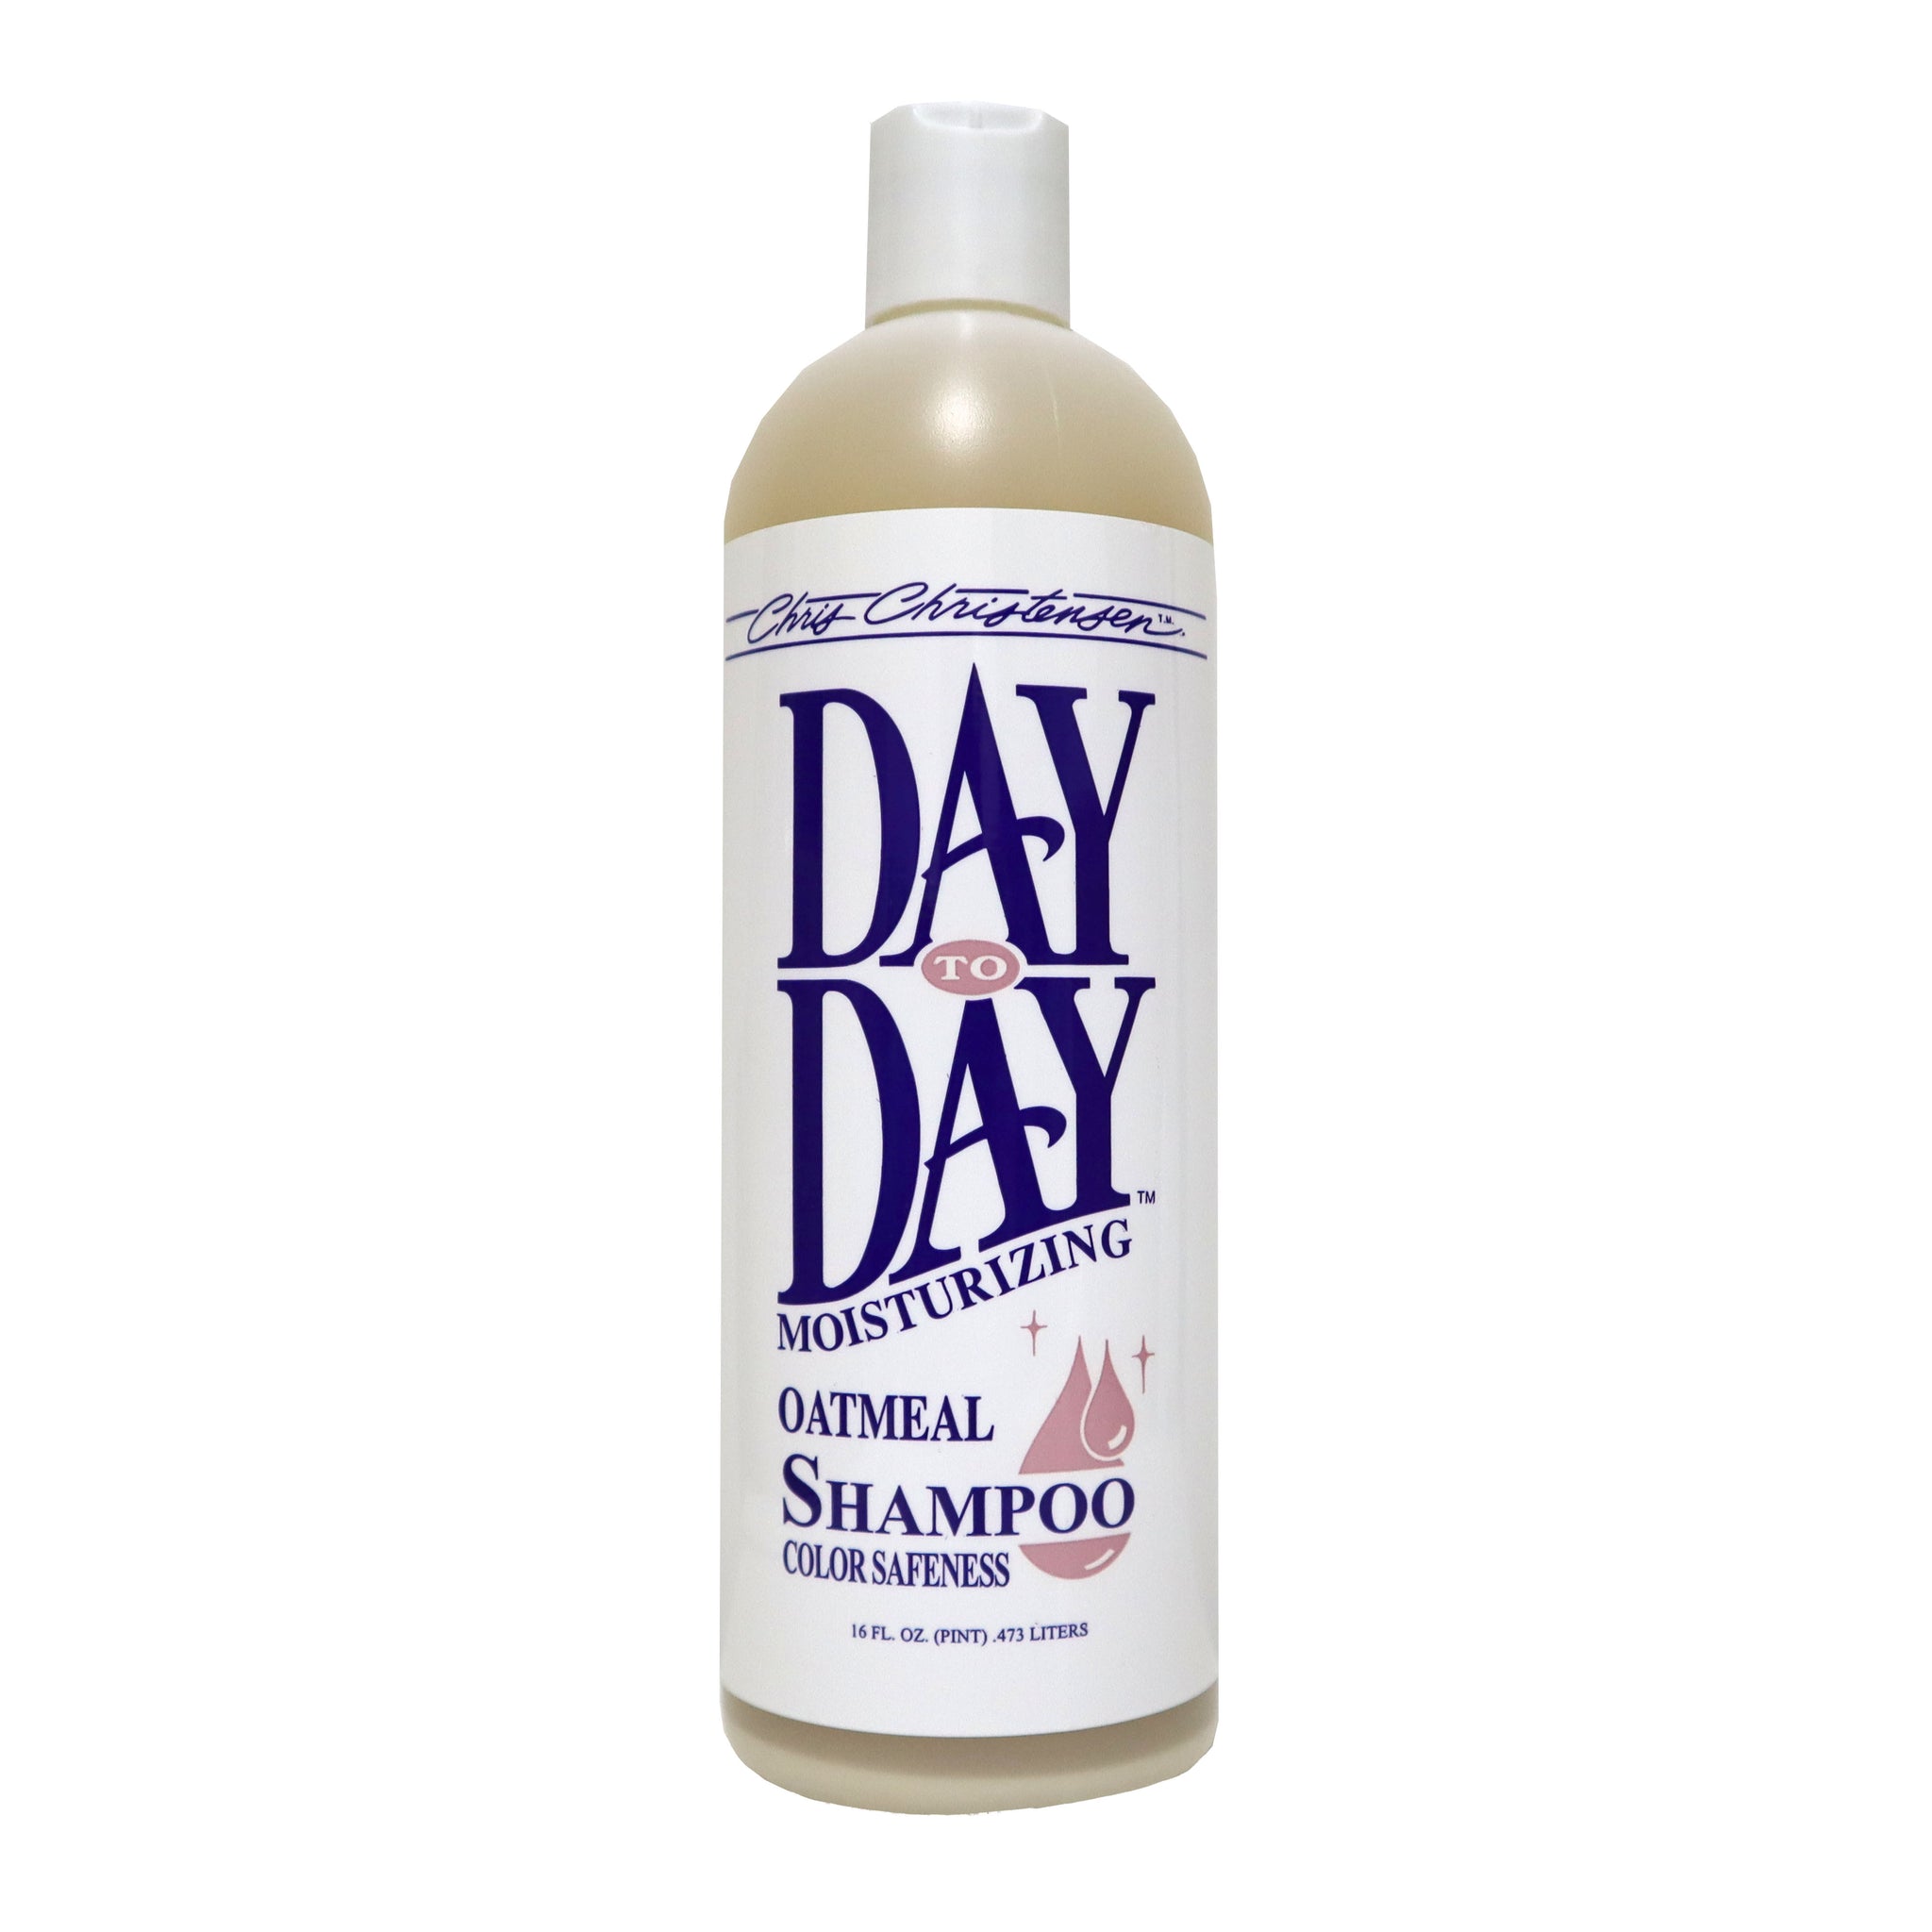 Day to Day Moisturizing Shampoo